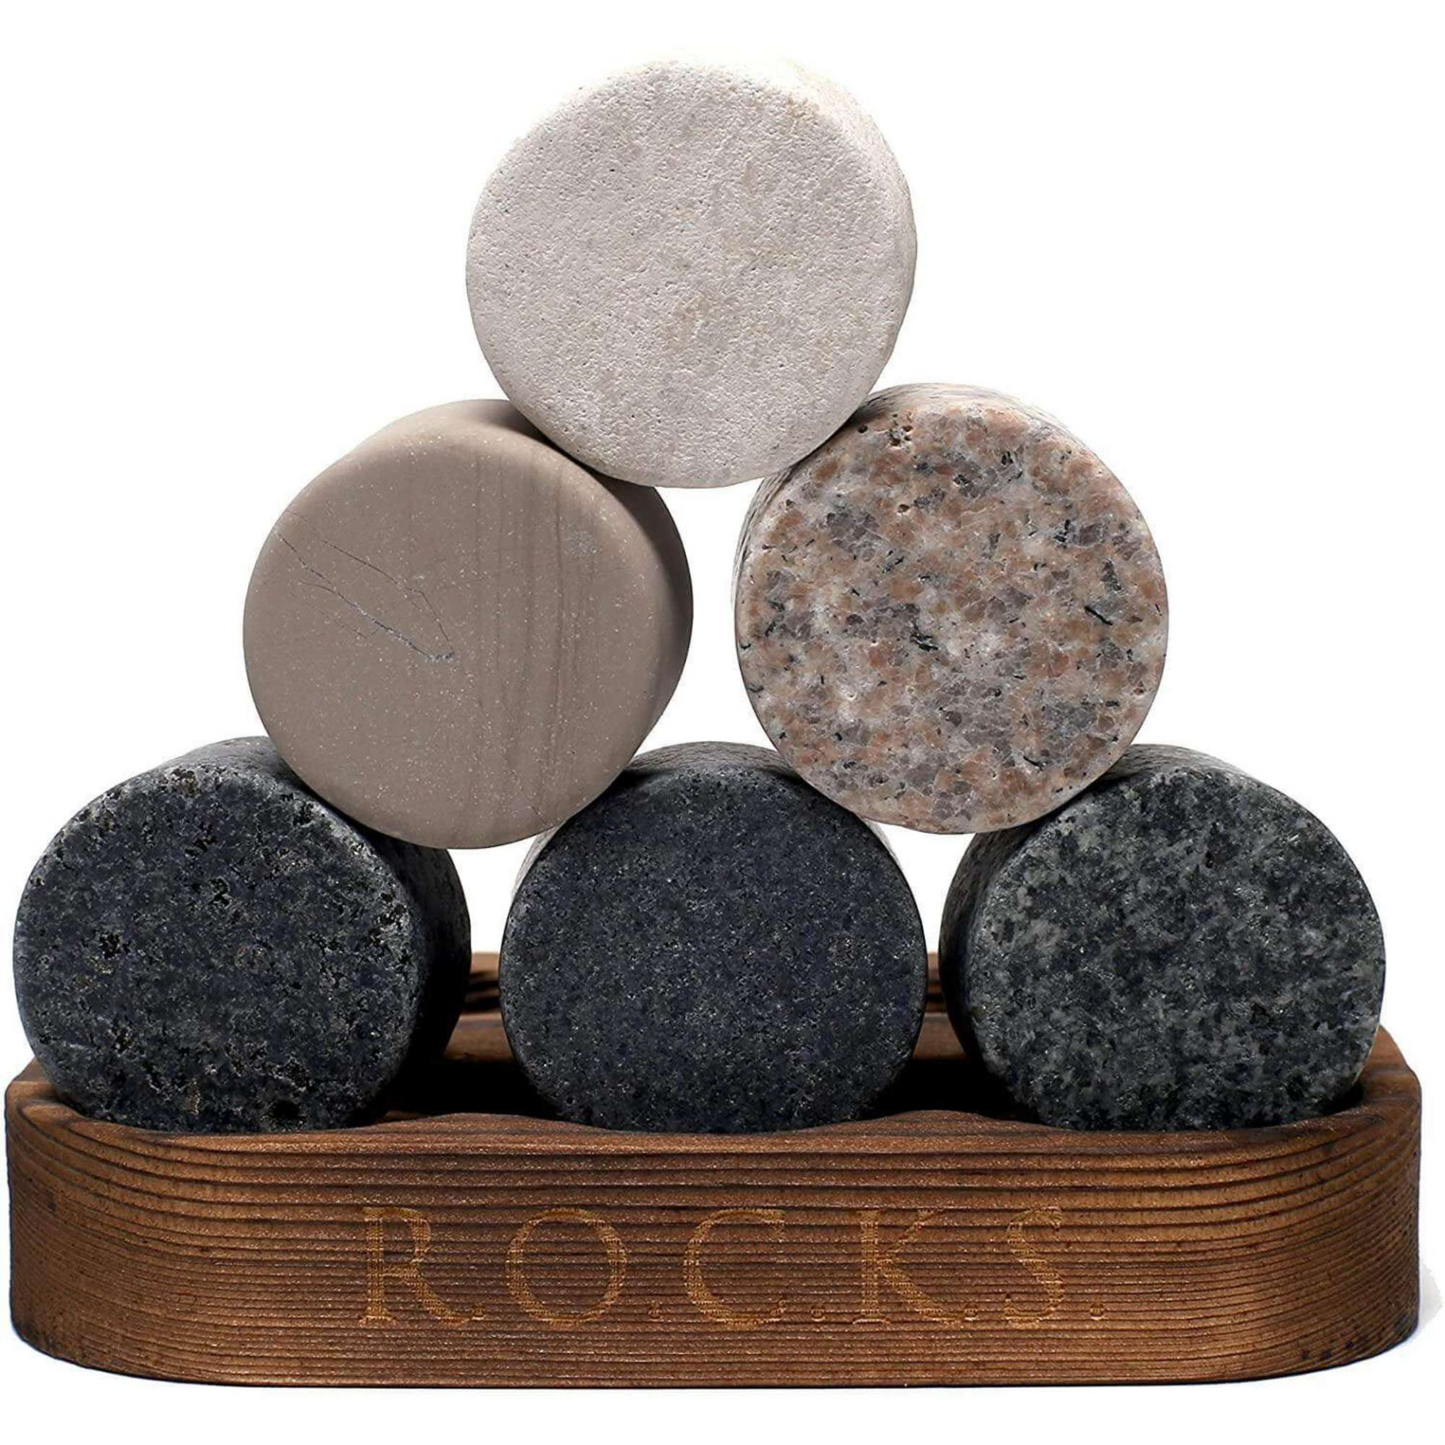 The Original ROCKS Whiskey Chilling Stones - Set of 6 Granite Stones